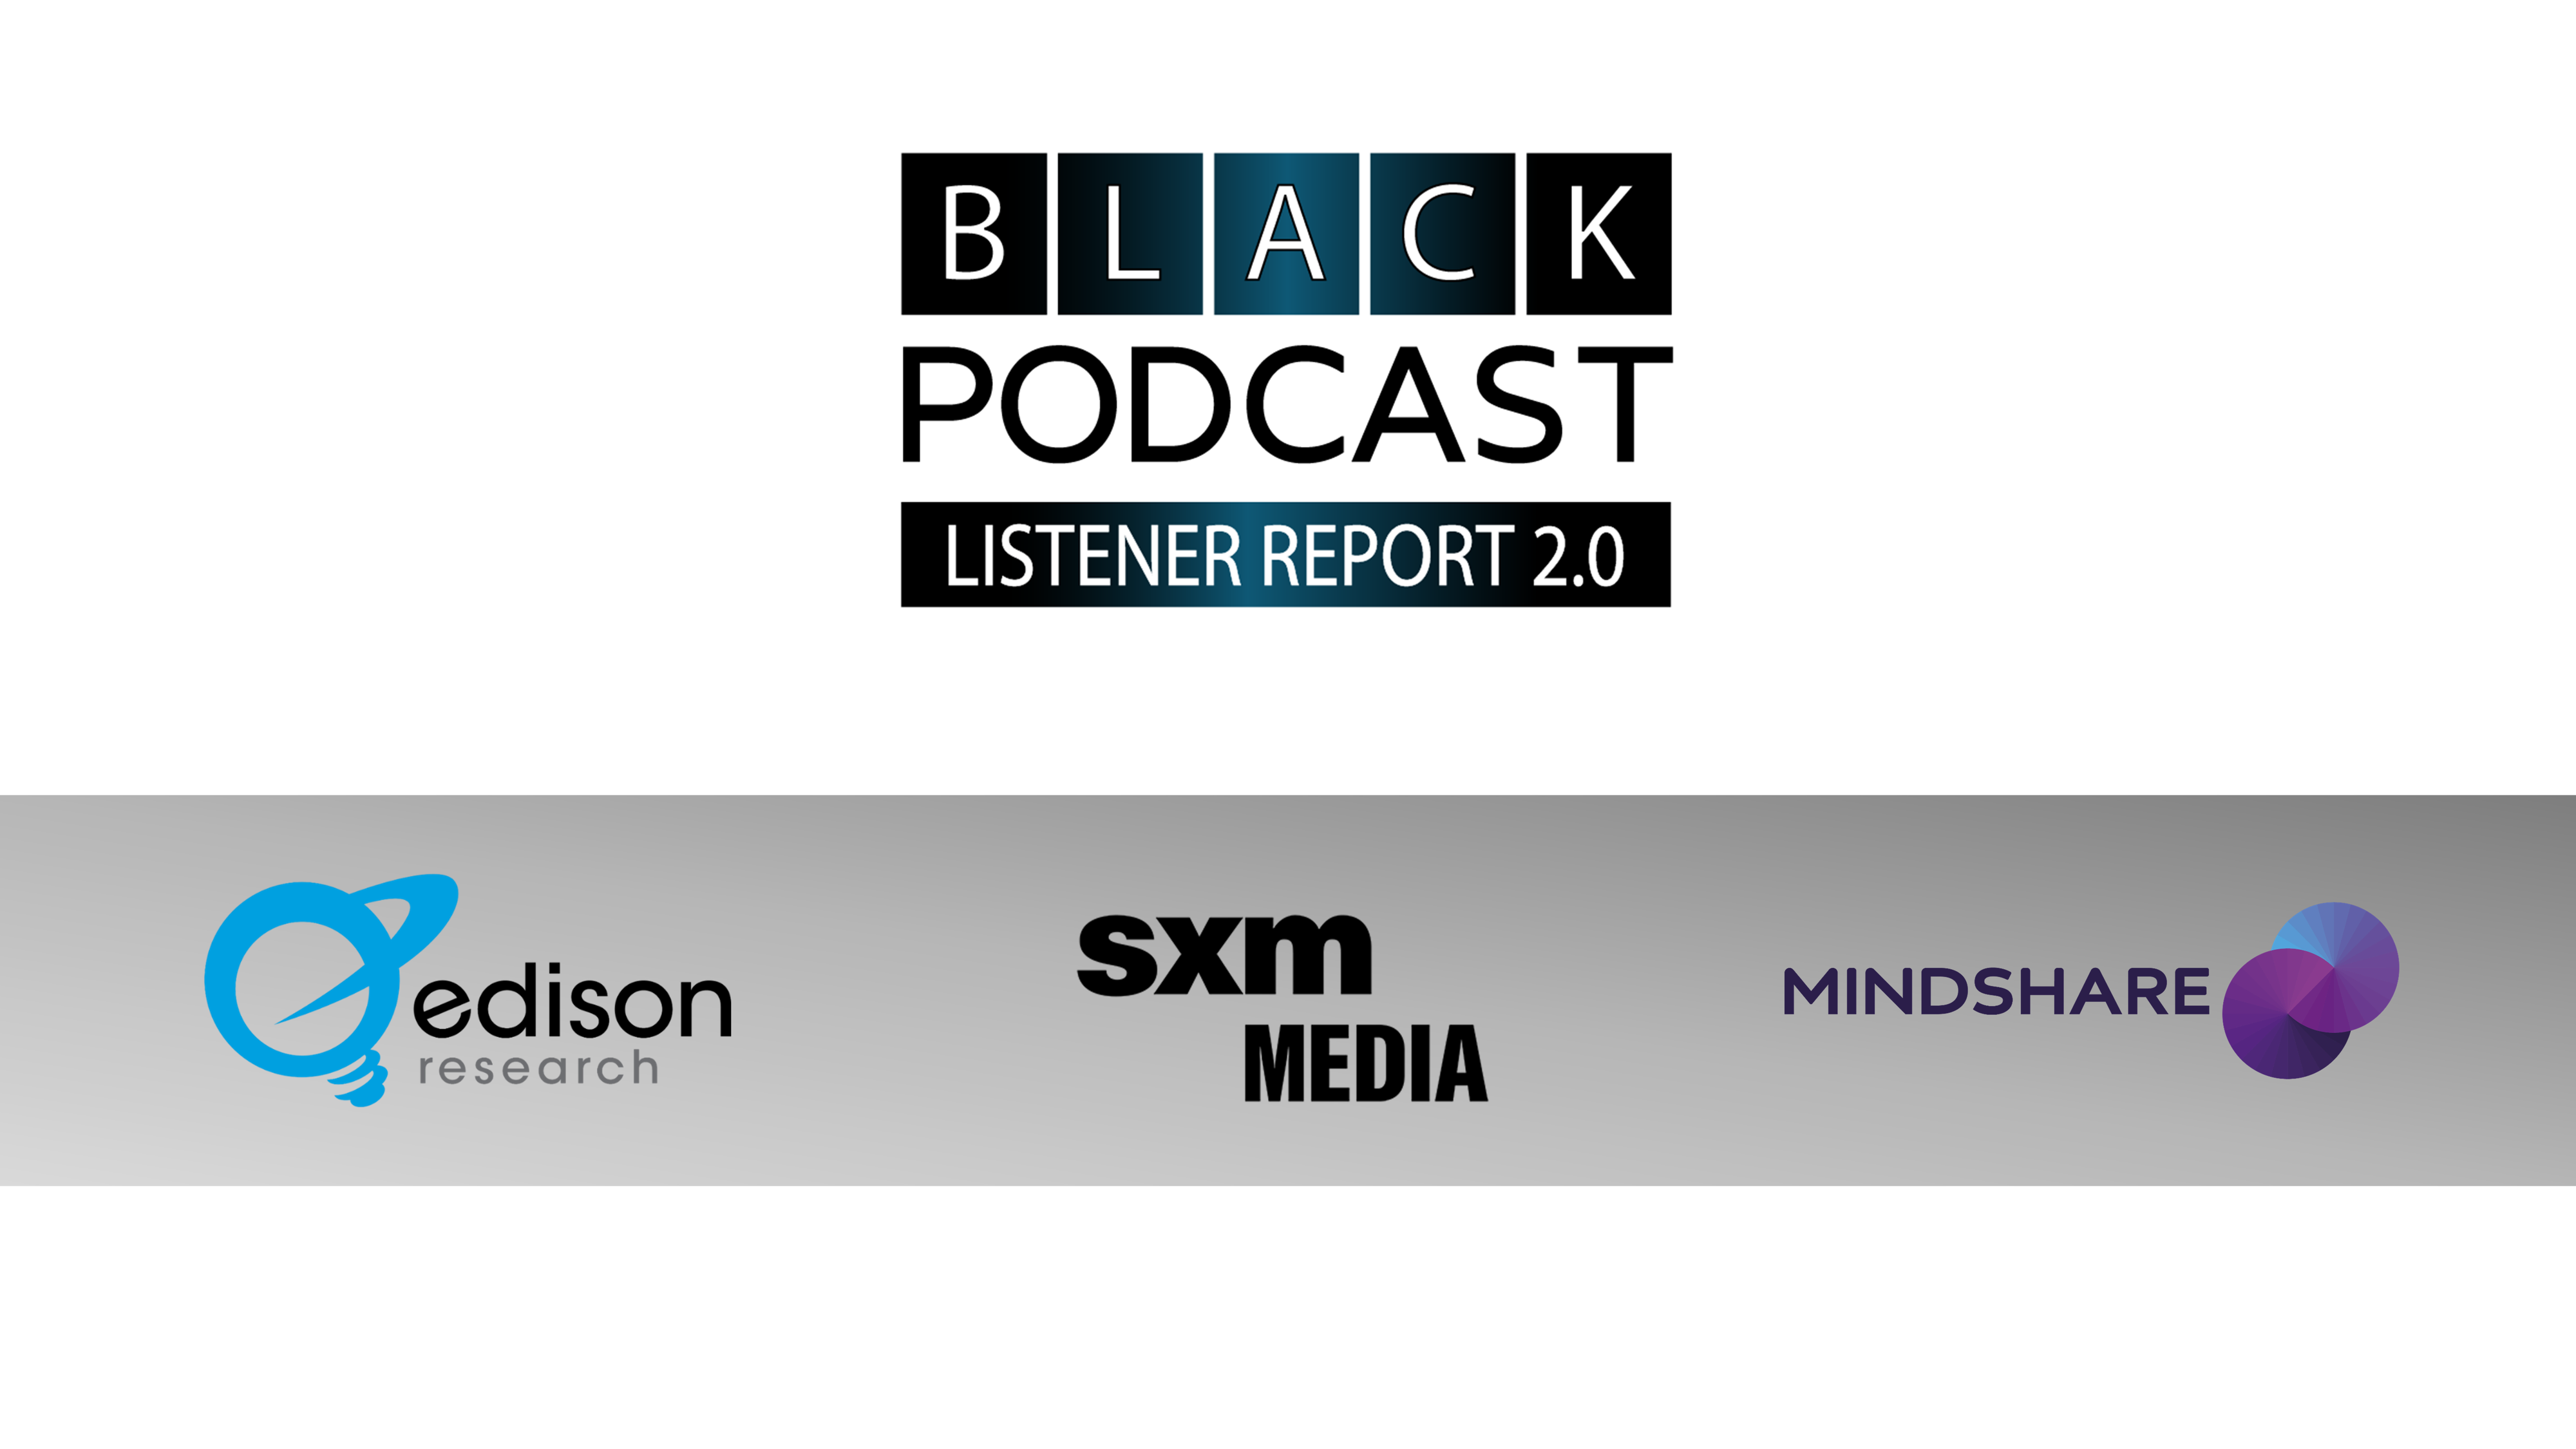 Black Podcast Listener Report 2.0